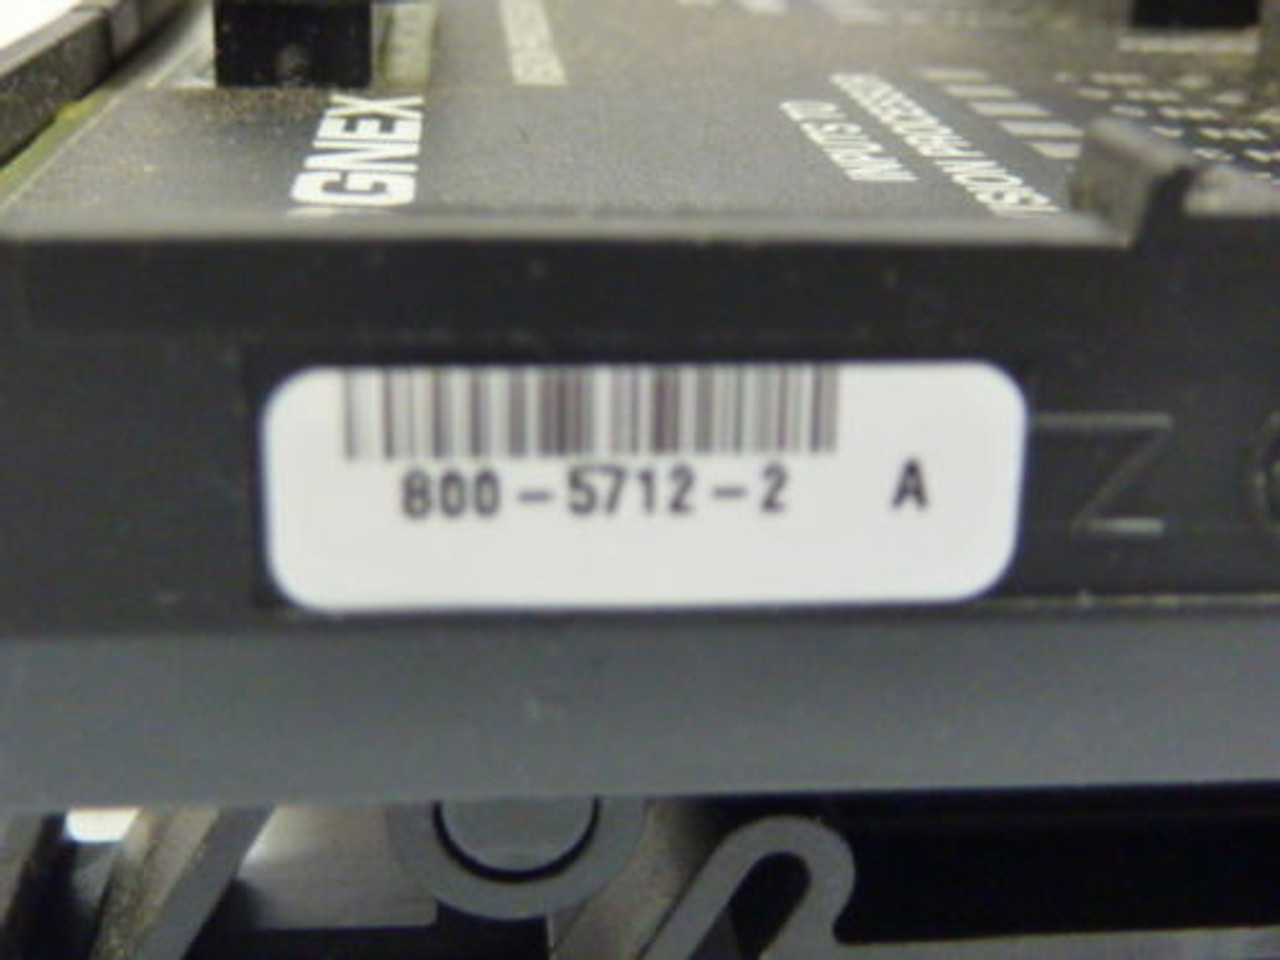 Cognex 800-5745-1 Processor In-Sight 3000 USED